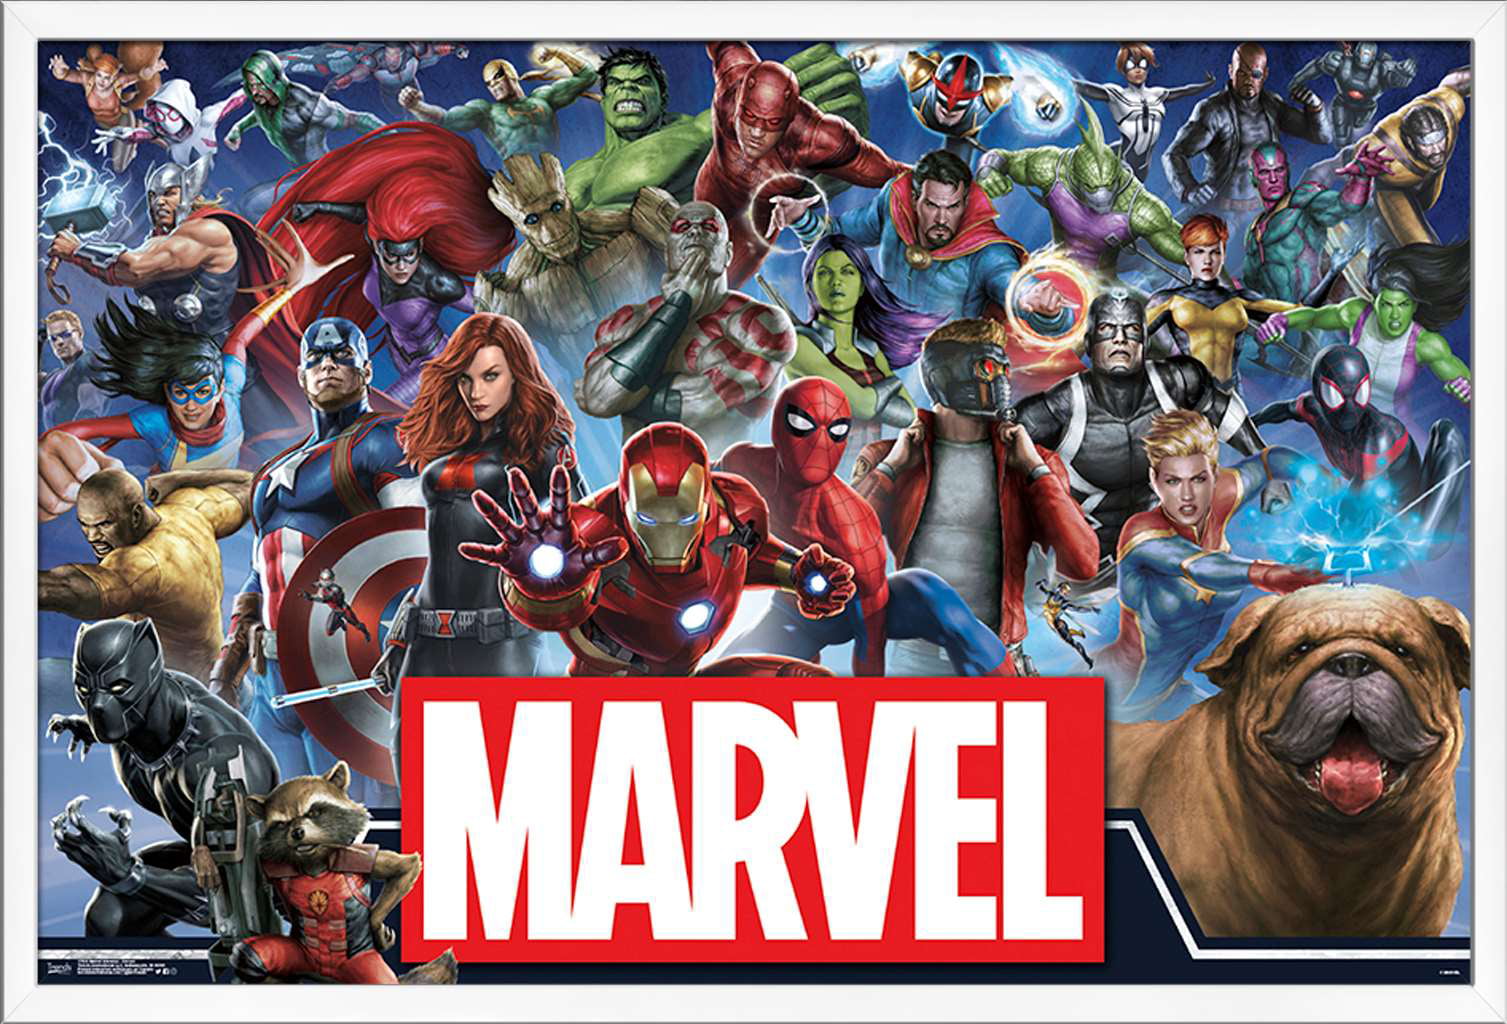 Marvel Comics - Marvel Universe - Heroes Wall Poster, 22.375 x 34, Framed